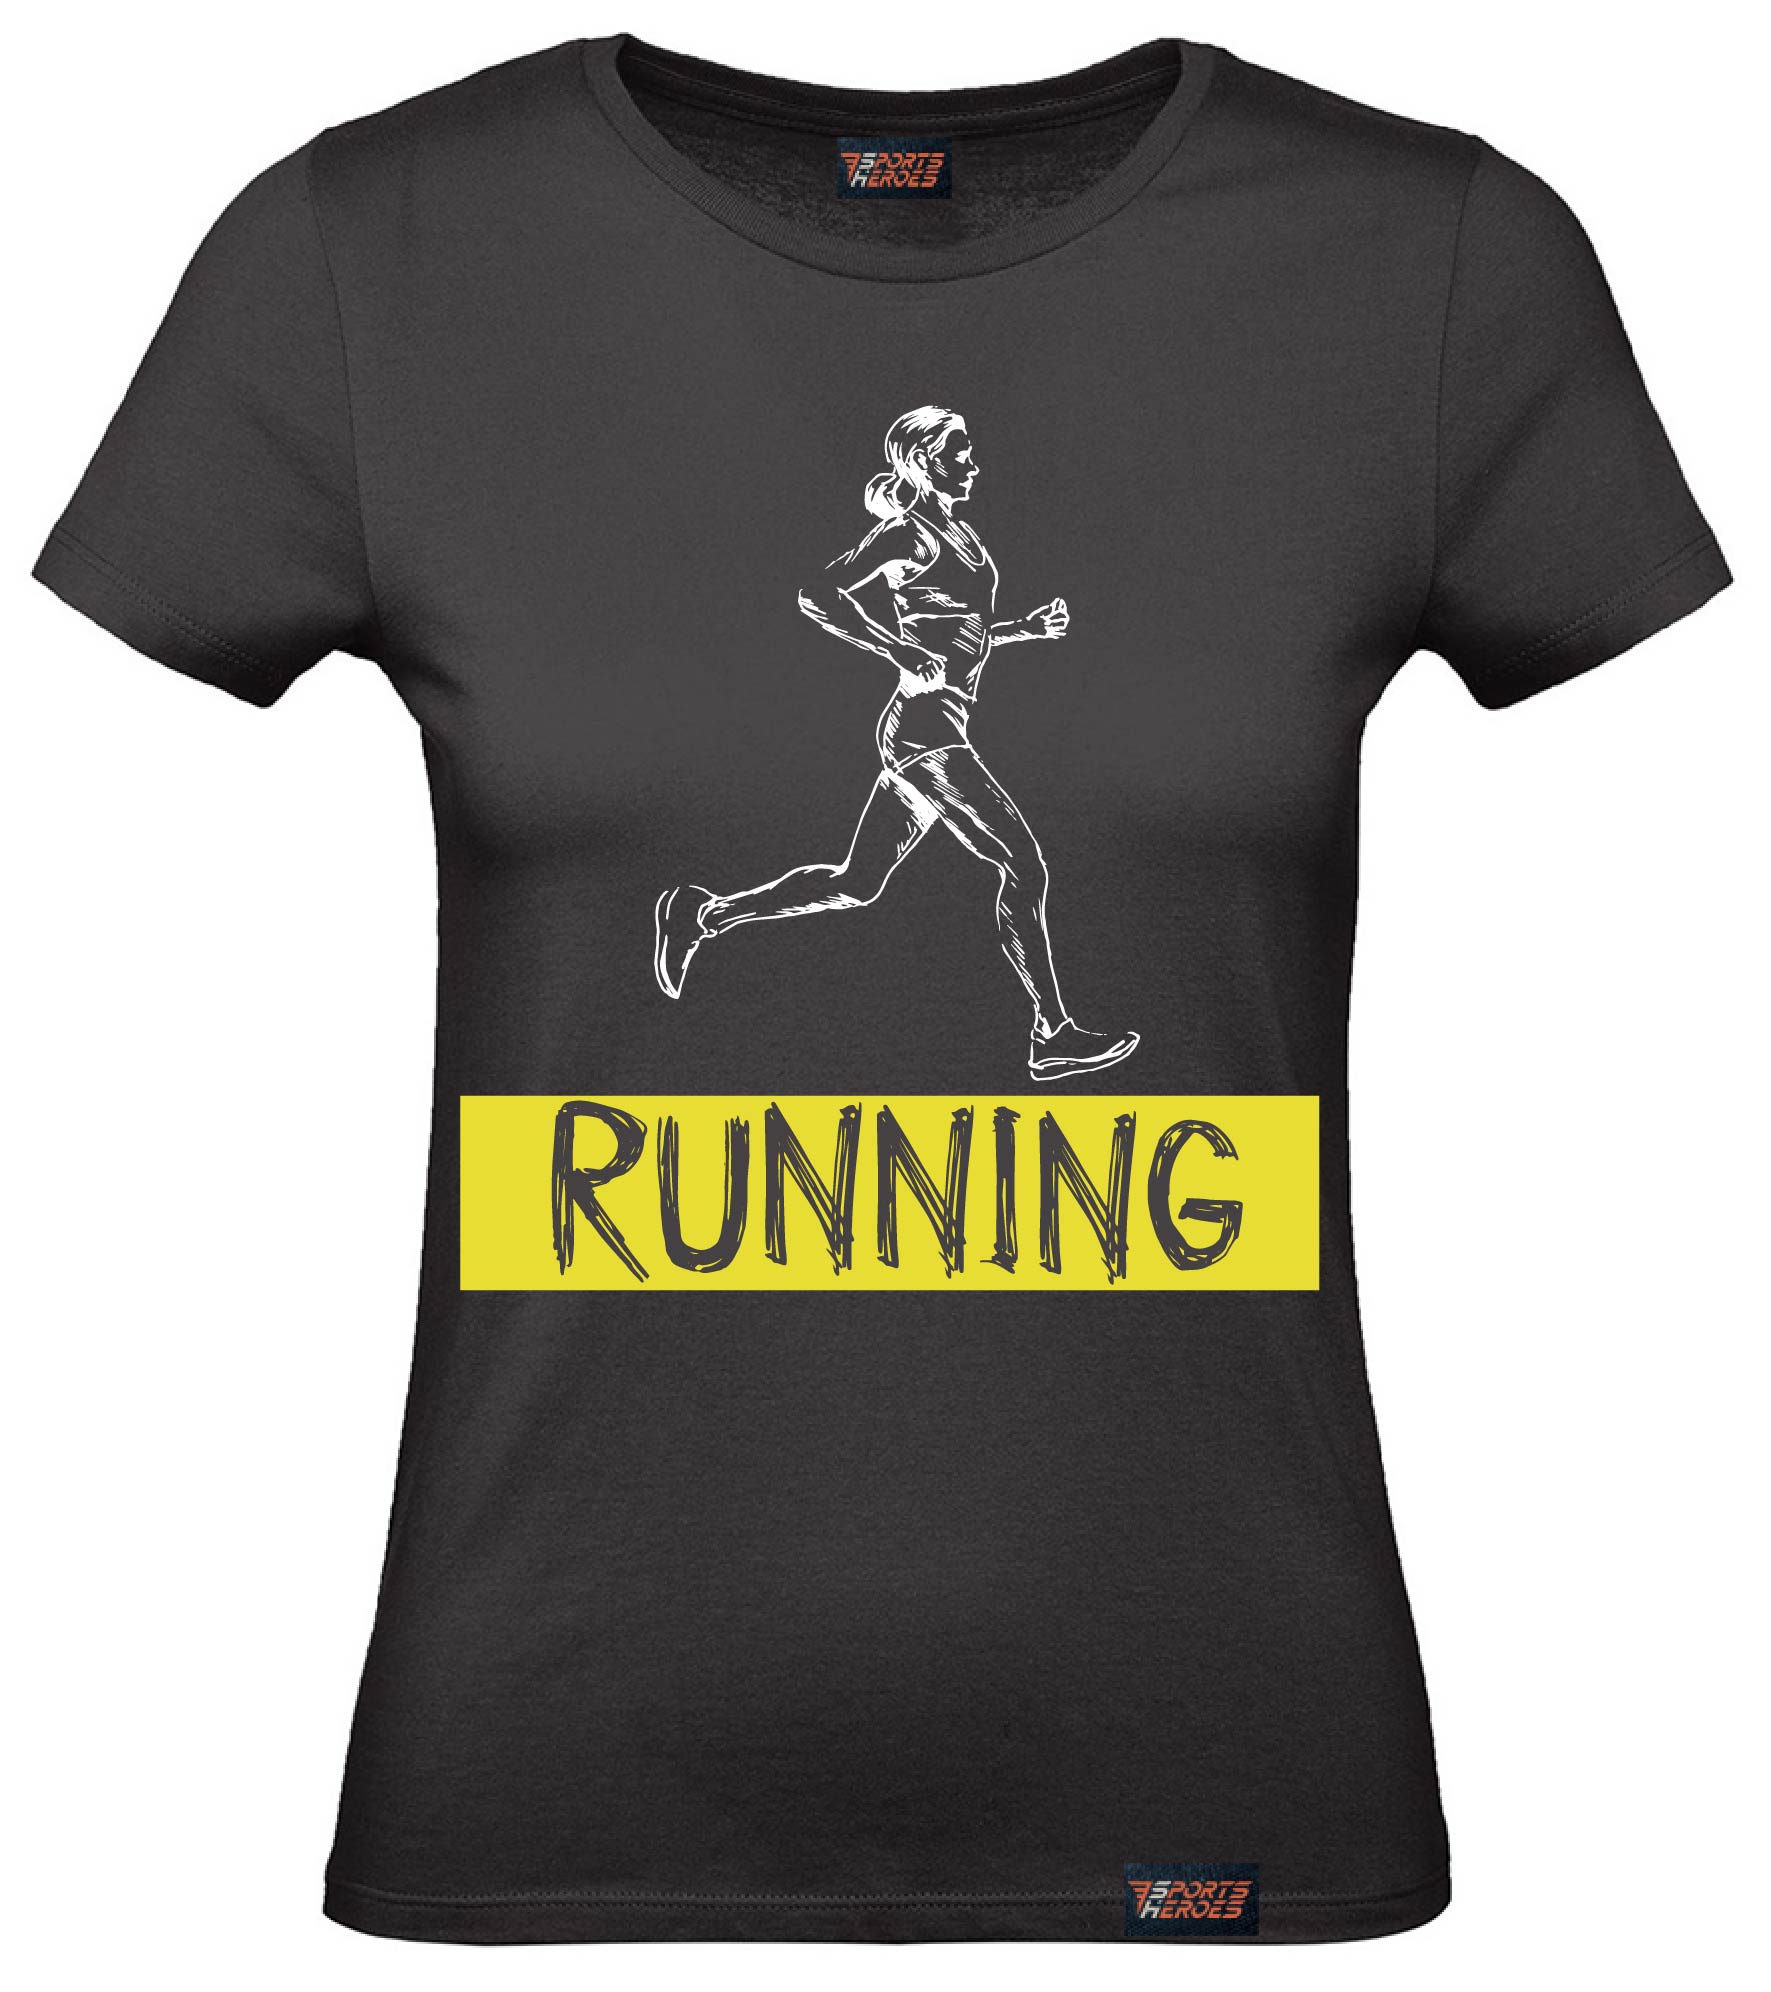 Футболка забег. Running футболка. Чайные бега футболка. Футболка бег вреден. Футболки для бега по лесу.